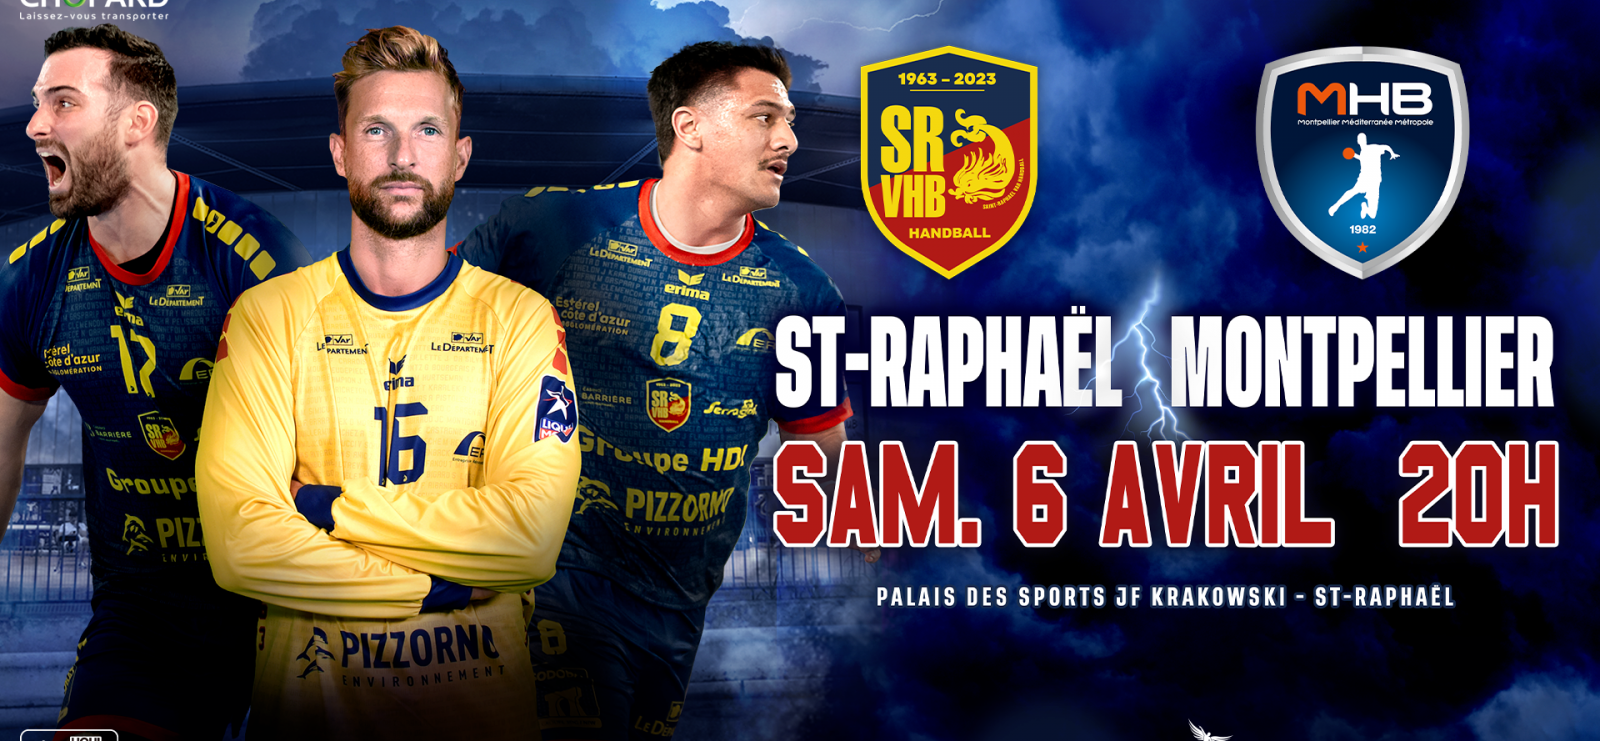 Match SRVHB Vs Montpellier Handball